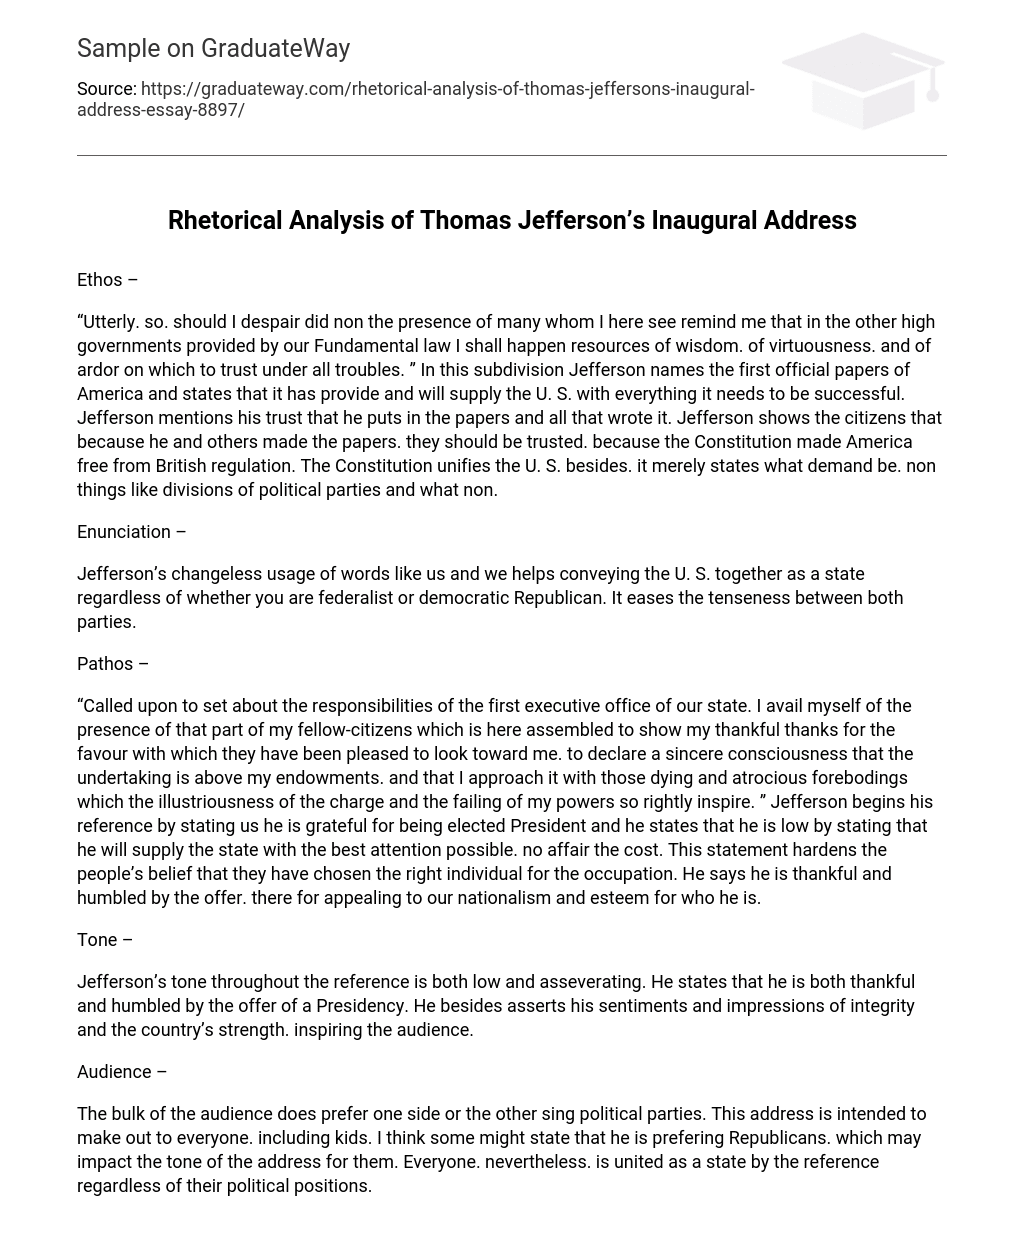 Rhetorical Analysis of Thomas Jefferson’s Inaugural Address